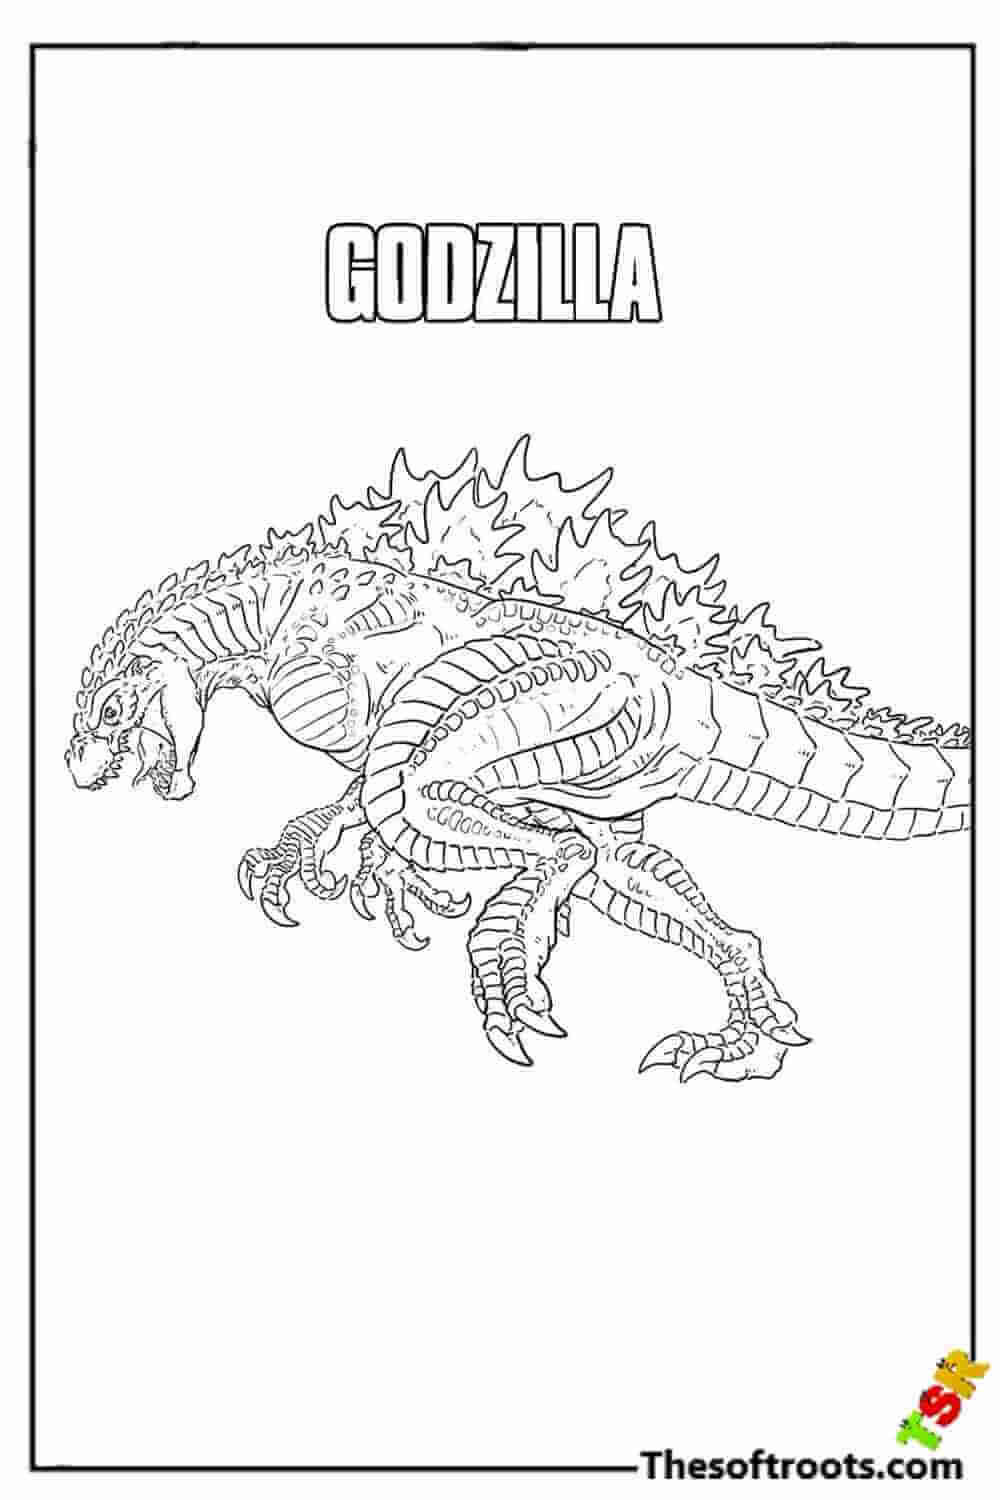 Printable Godzilla coloring pages